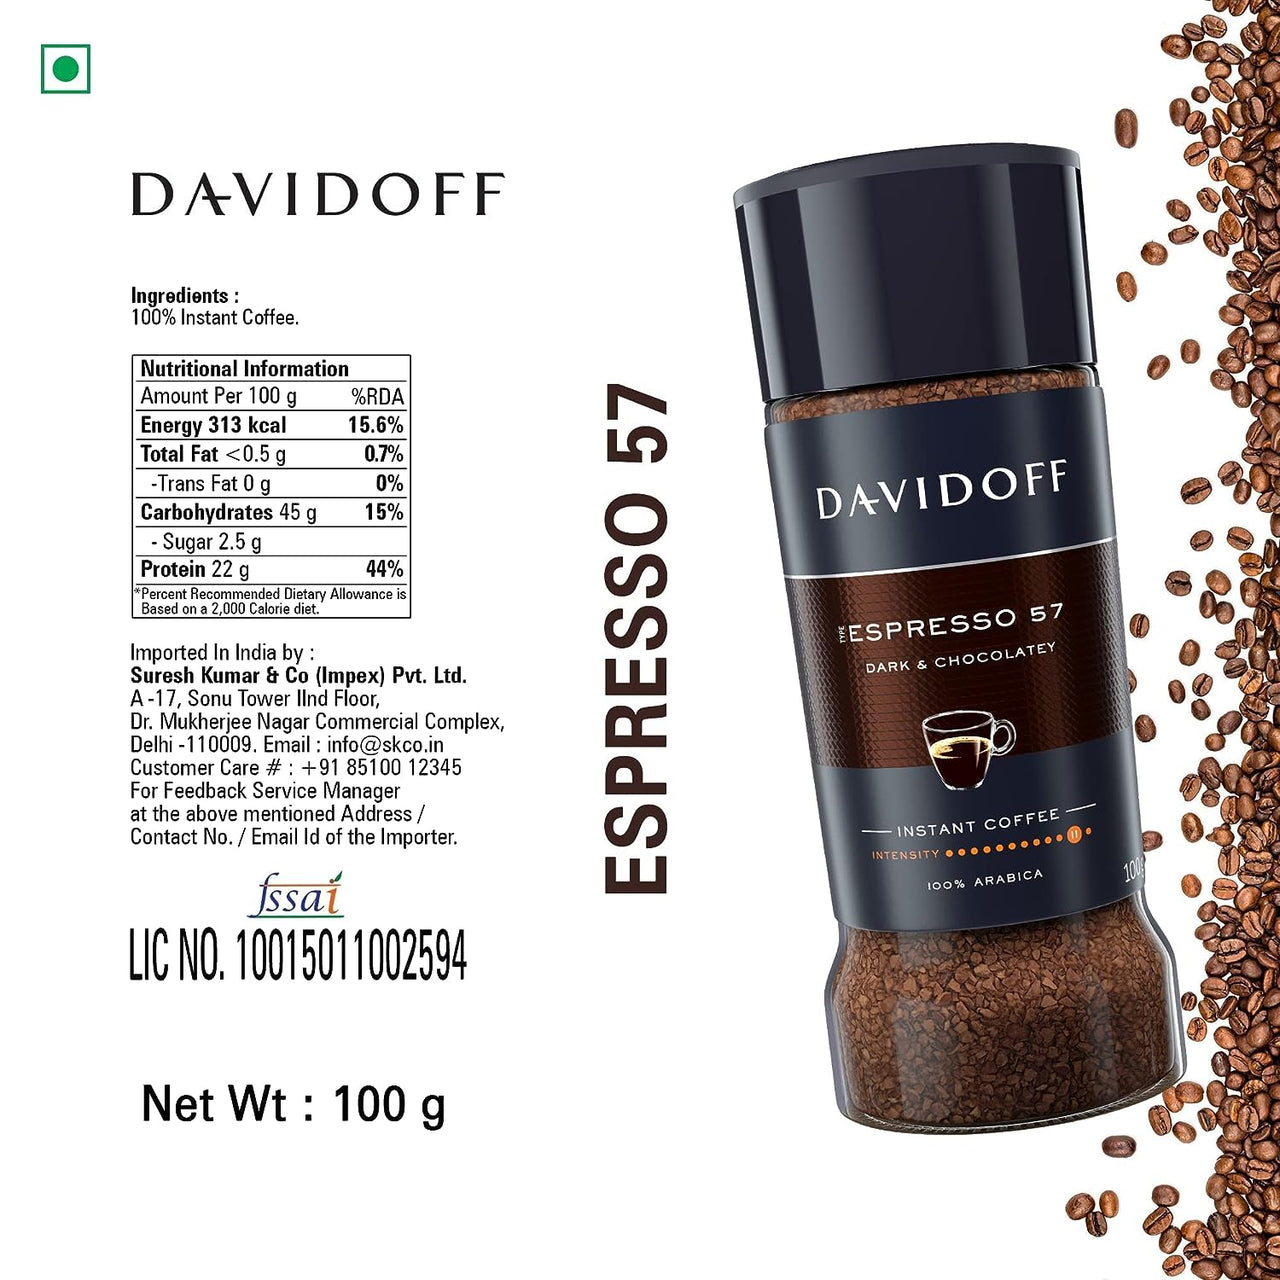 Davidoff-Coffee-Cafe Espresso 57,Intense Instant Coffee Jar- 100g